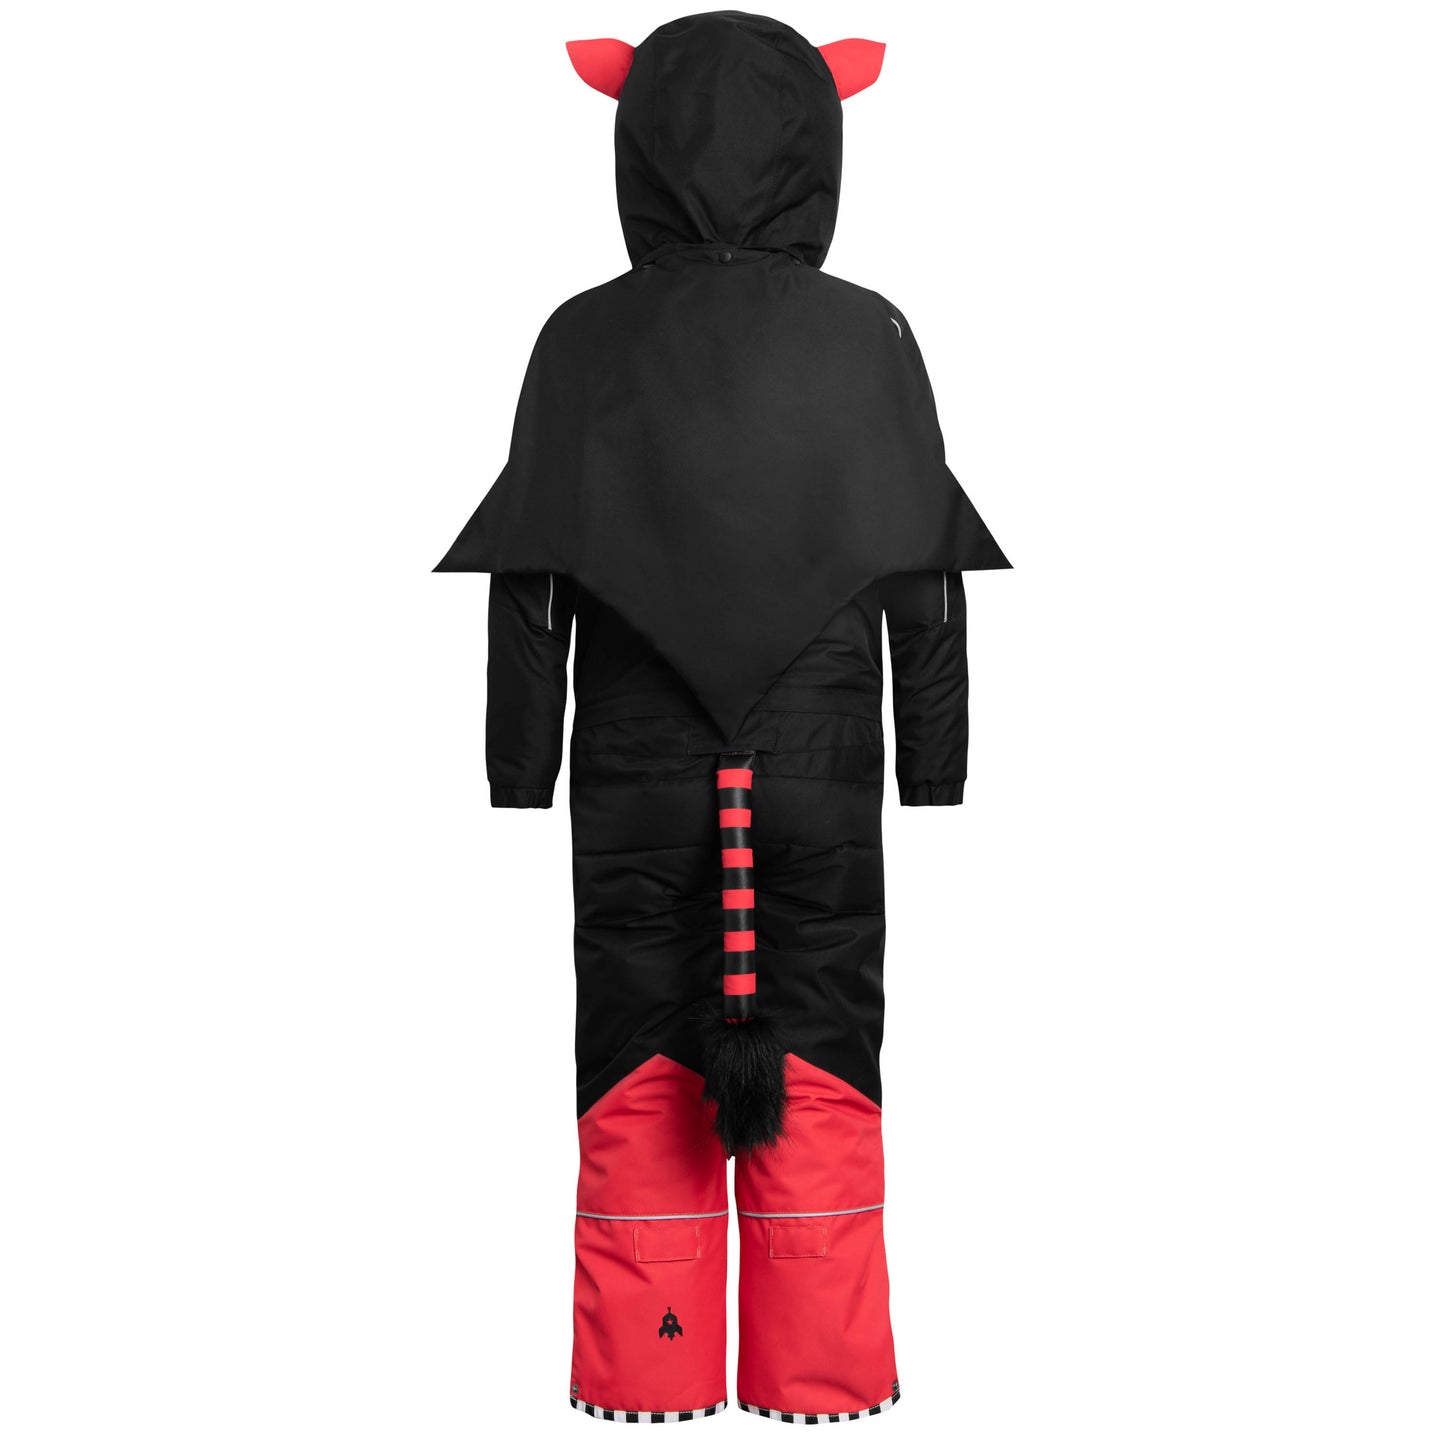 DevilDo Black Snowsuit